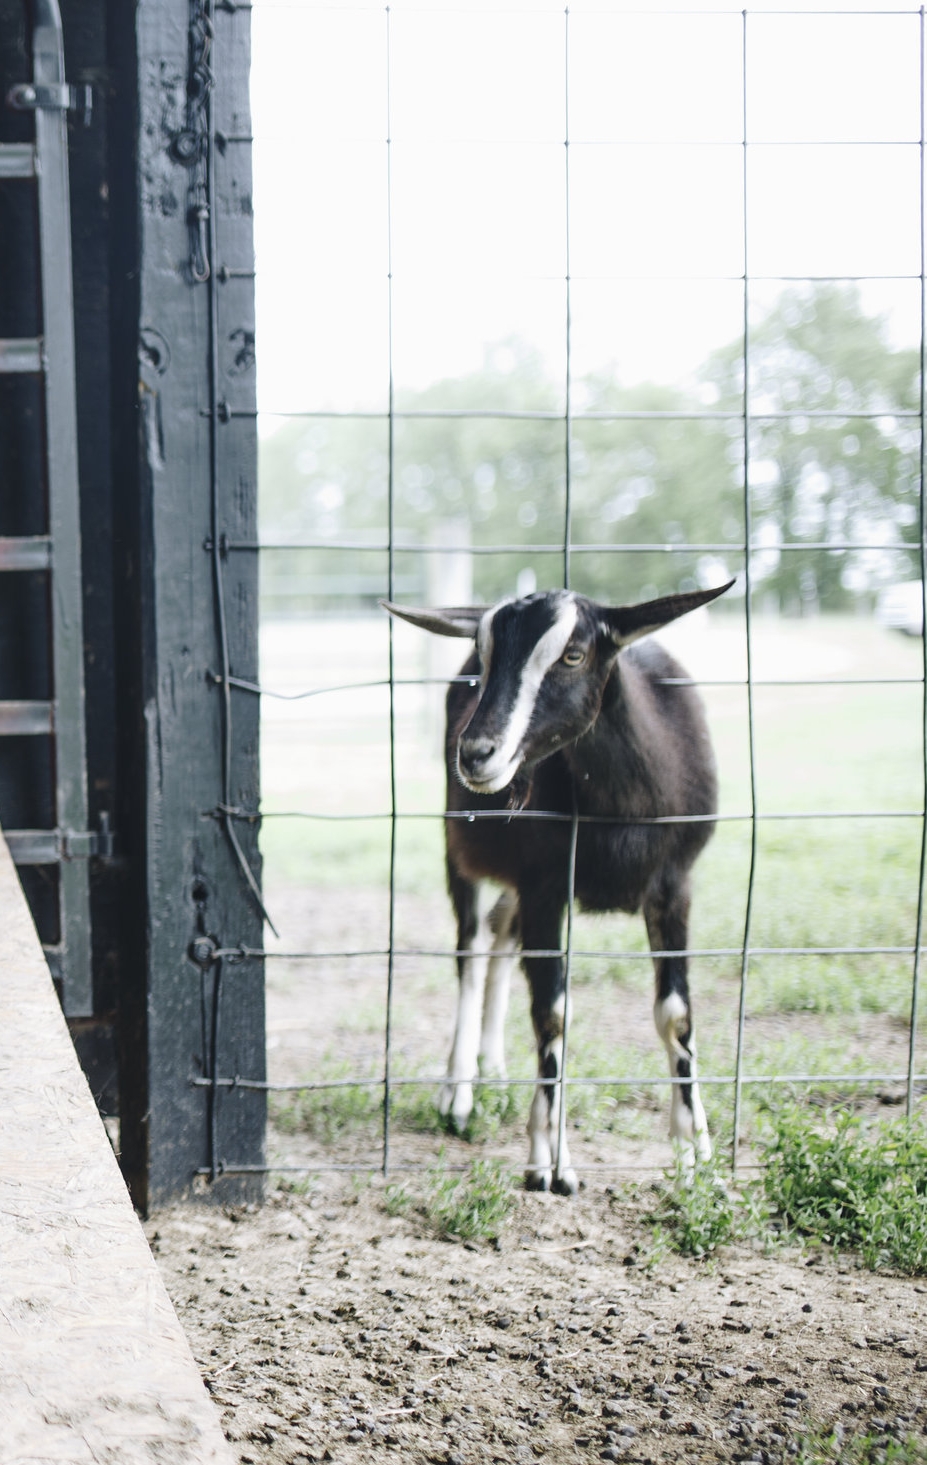 Organic Goat’s Milk — Yelverton Mercantile